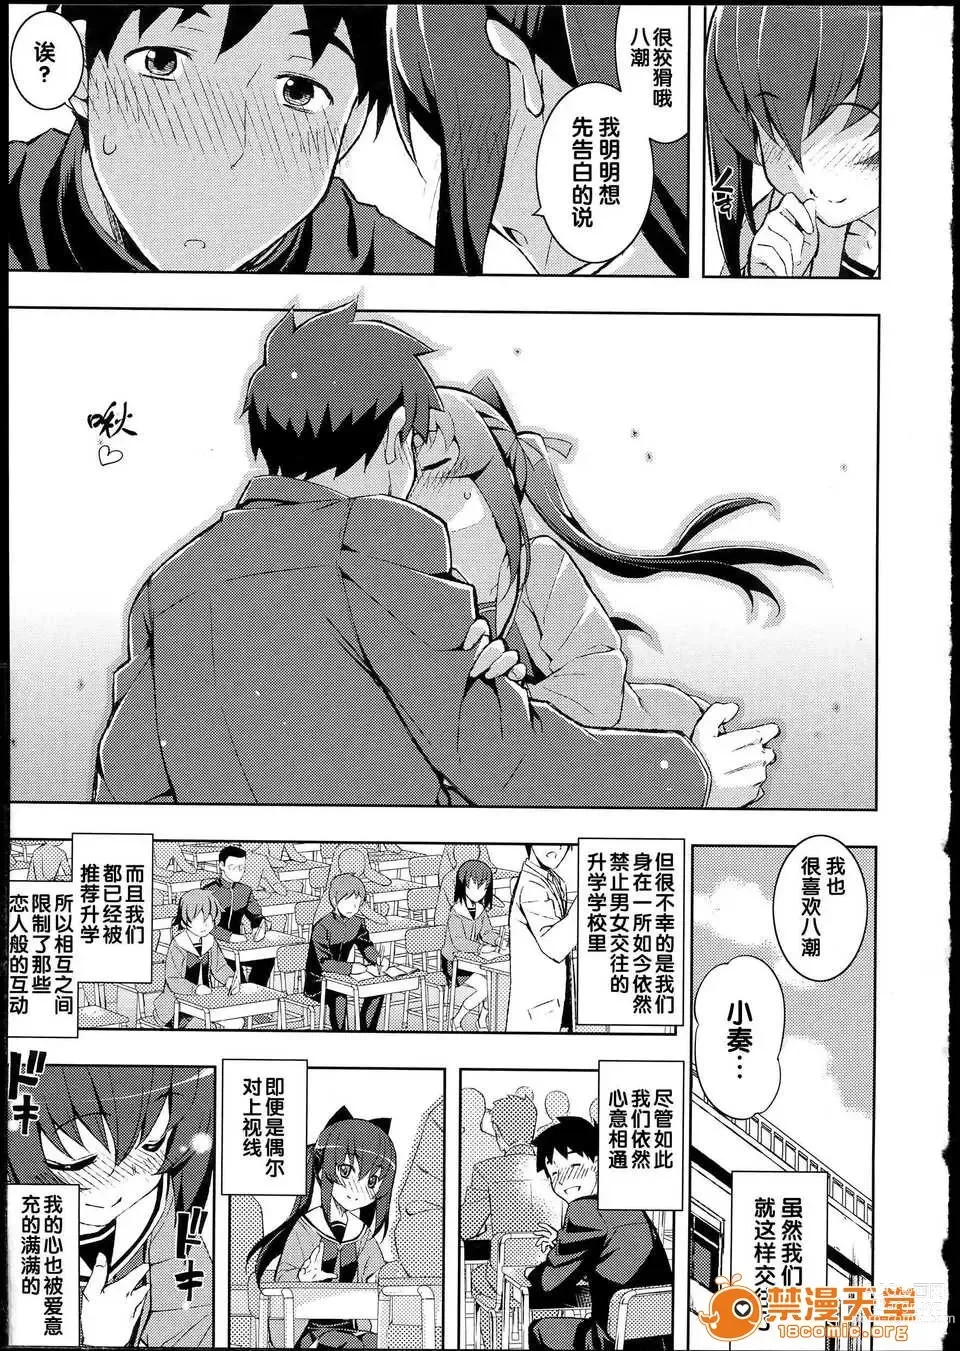 Page 11 of manga NTR2